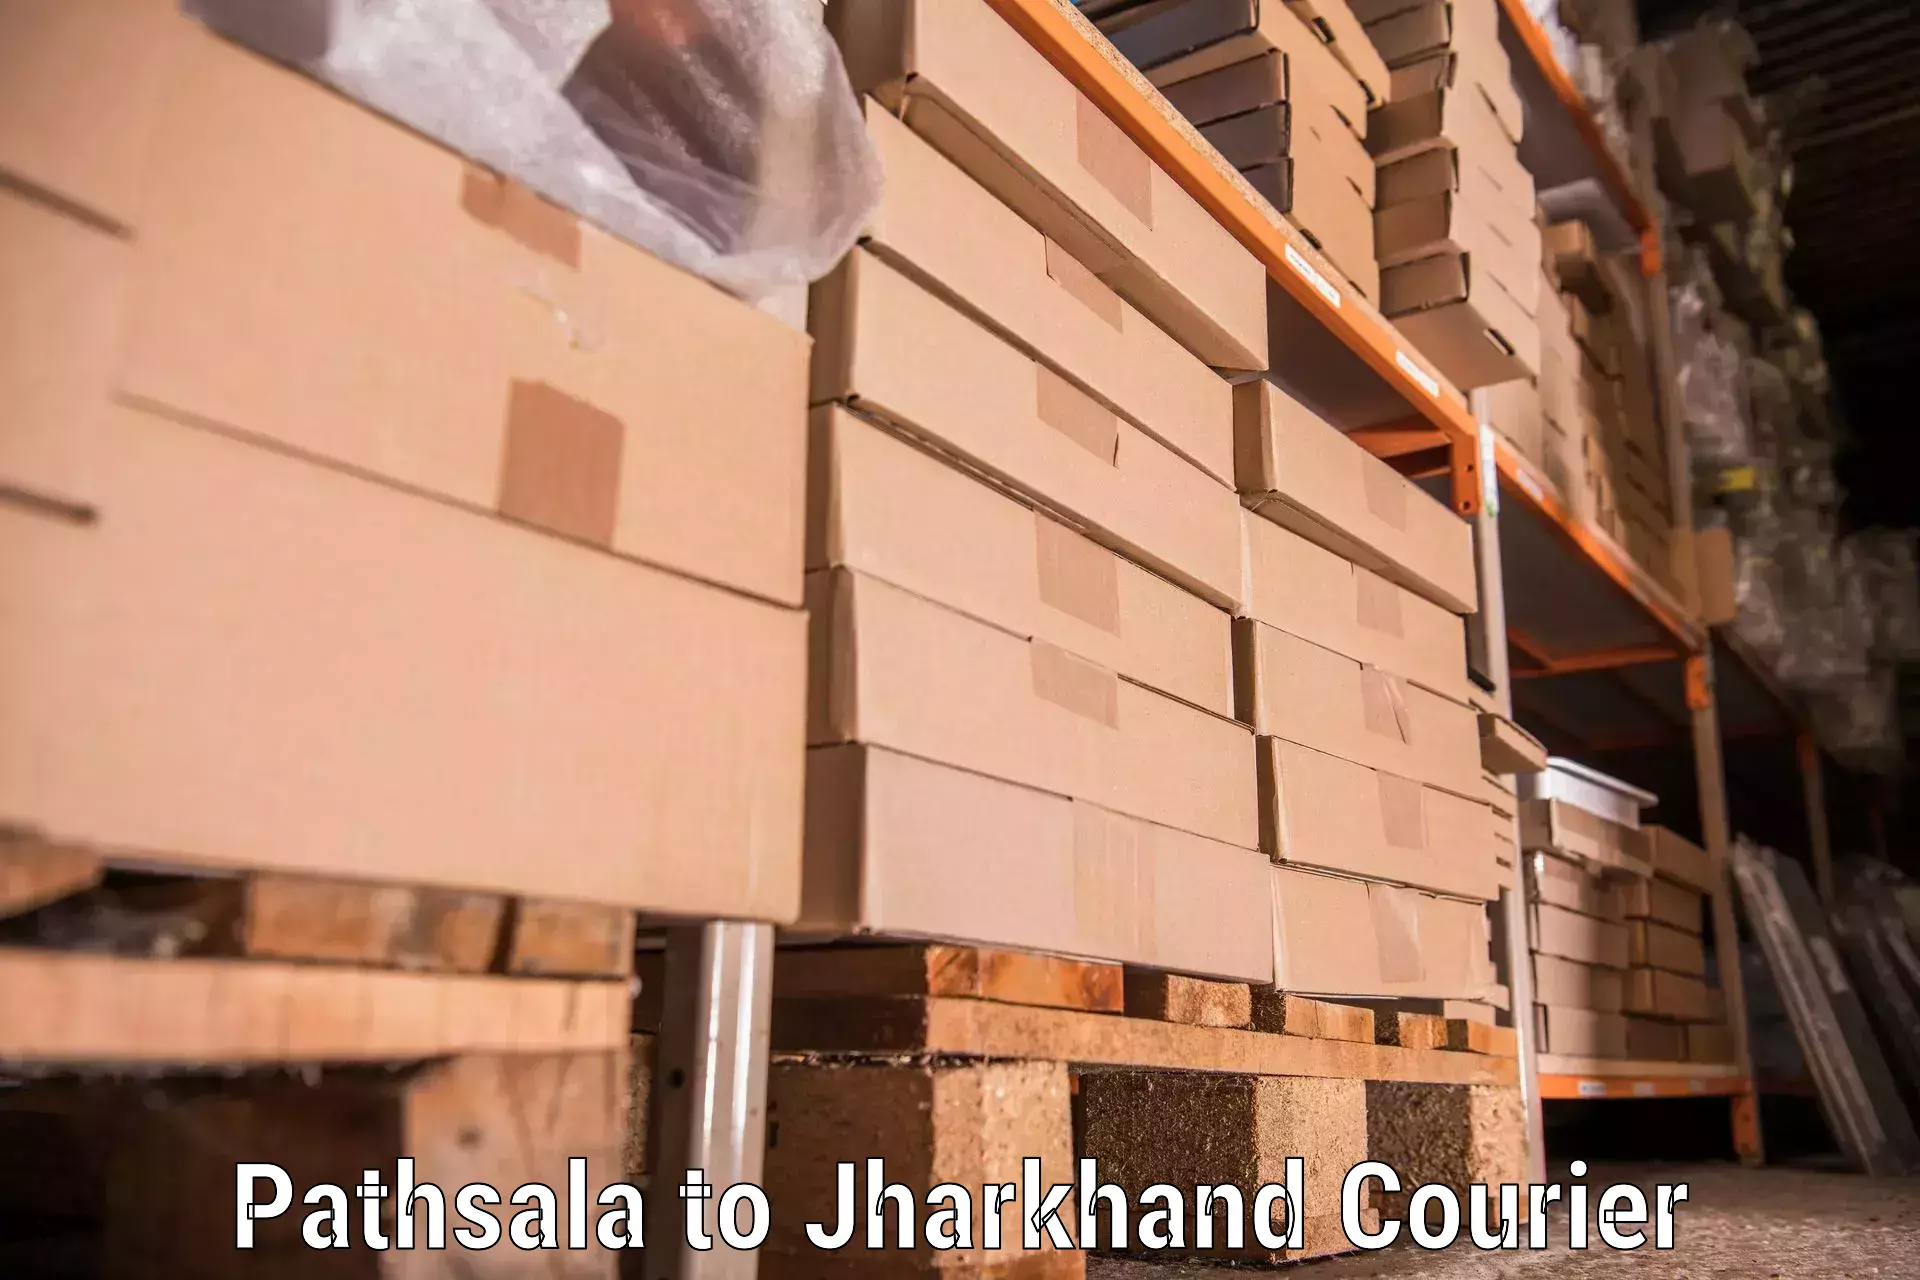 Furniture moving service Pathsala to Jamshedpur